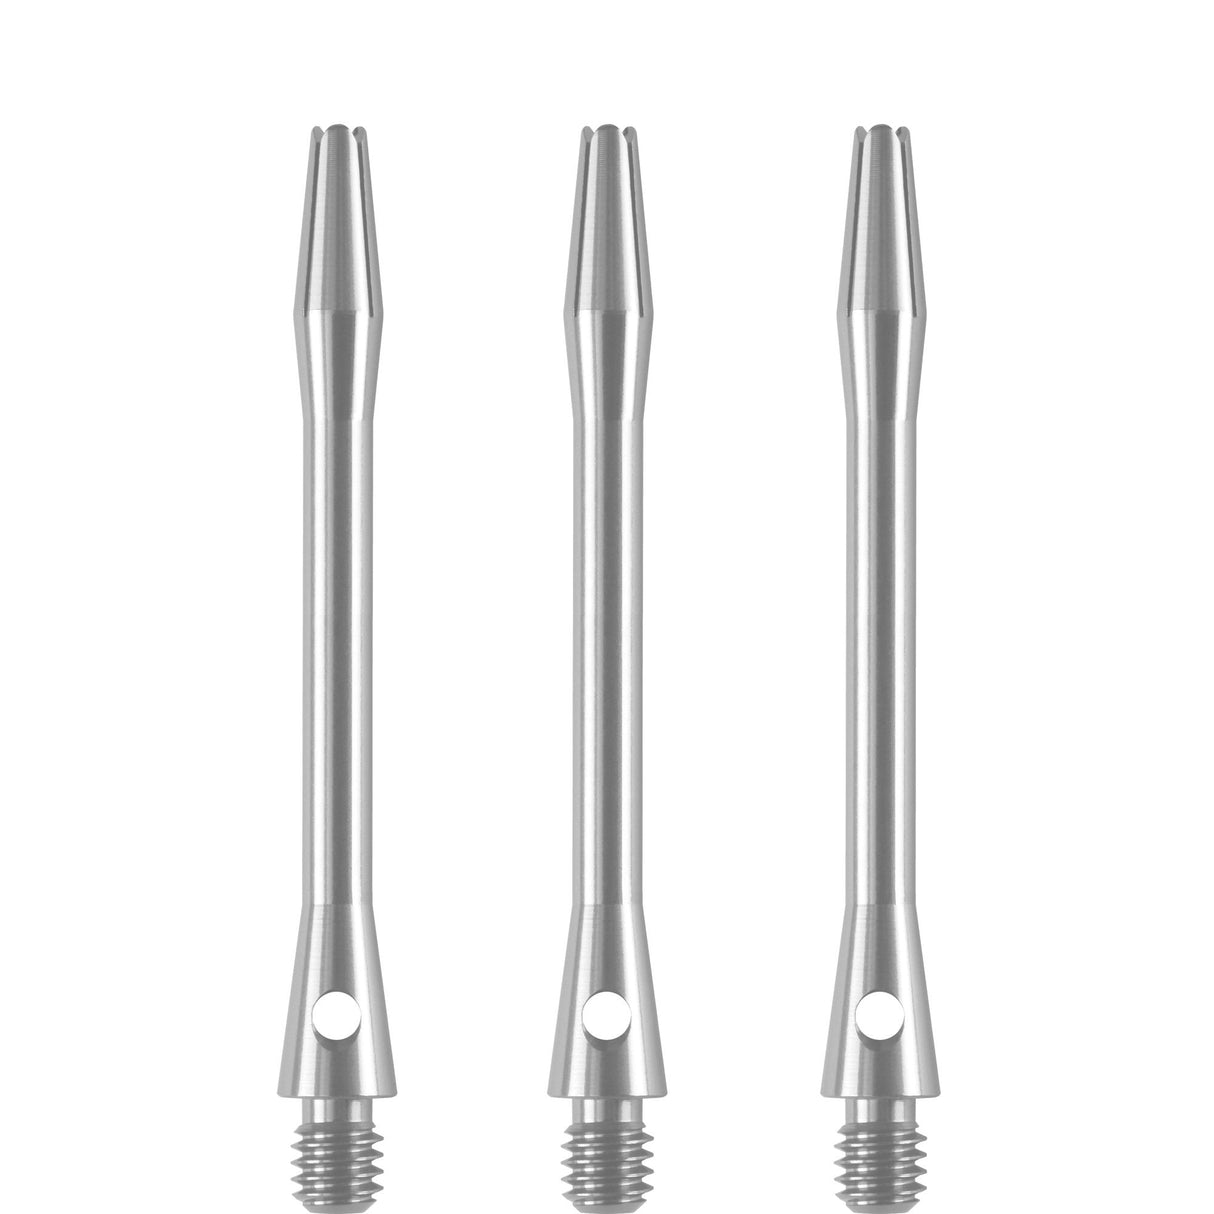 Designa Aluminium Shafts - Metal Dart Stems - Silver Medium